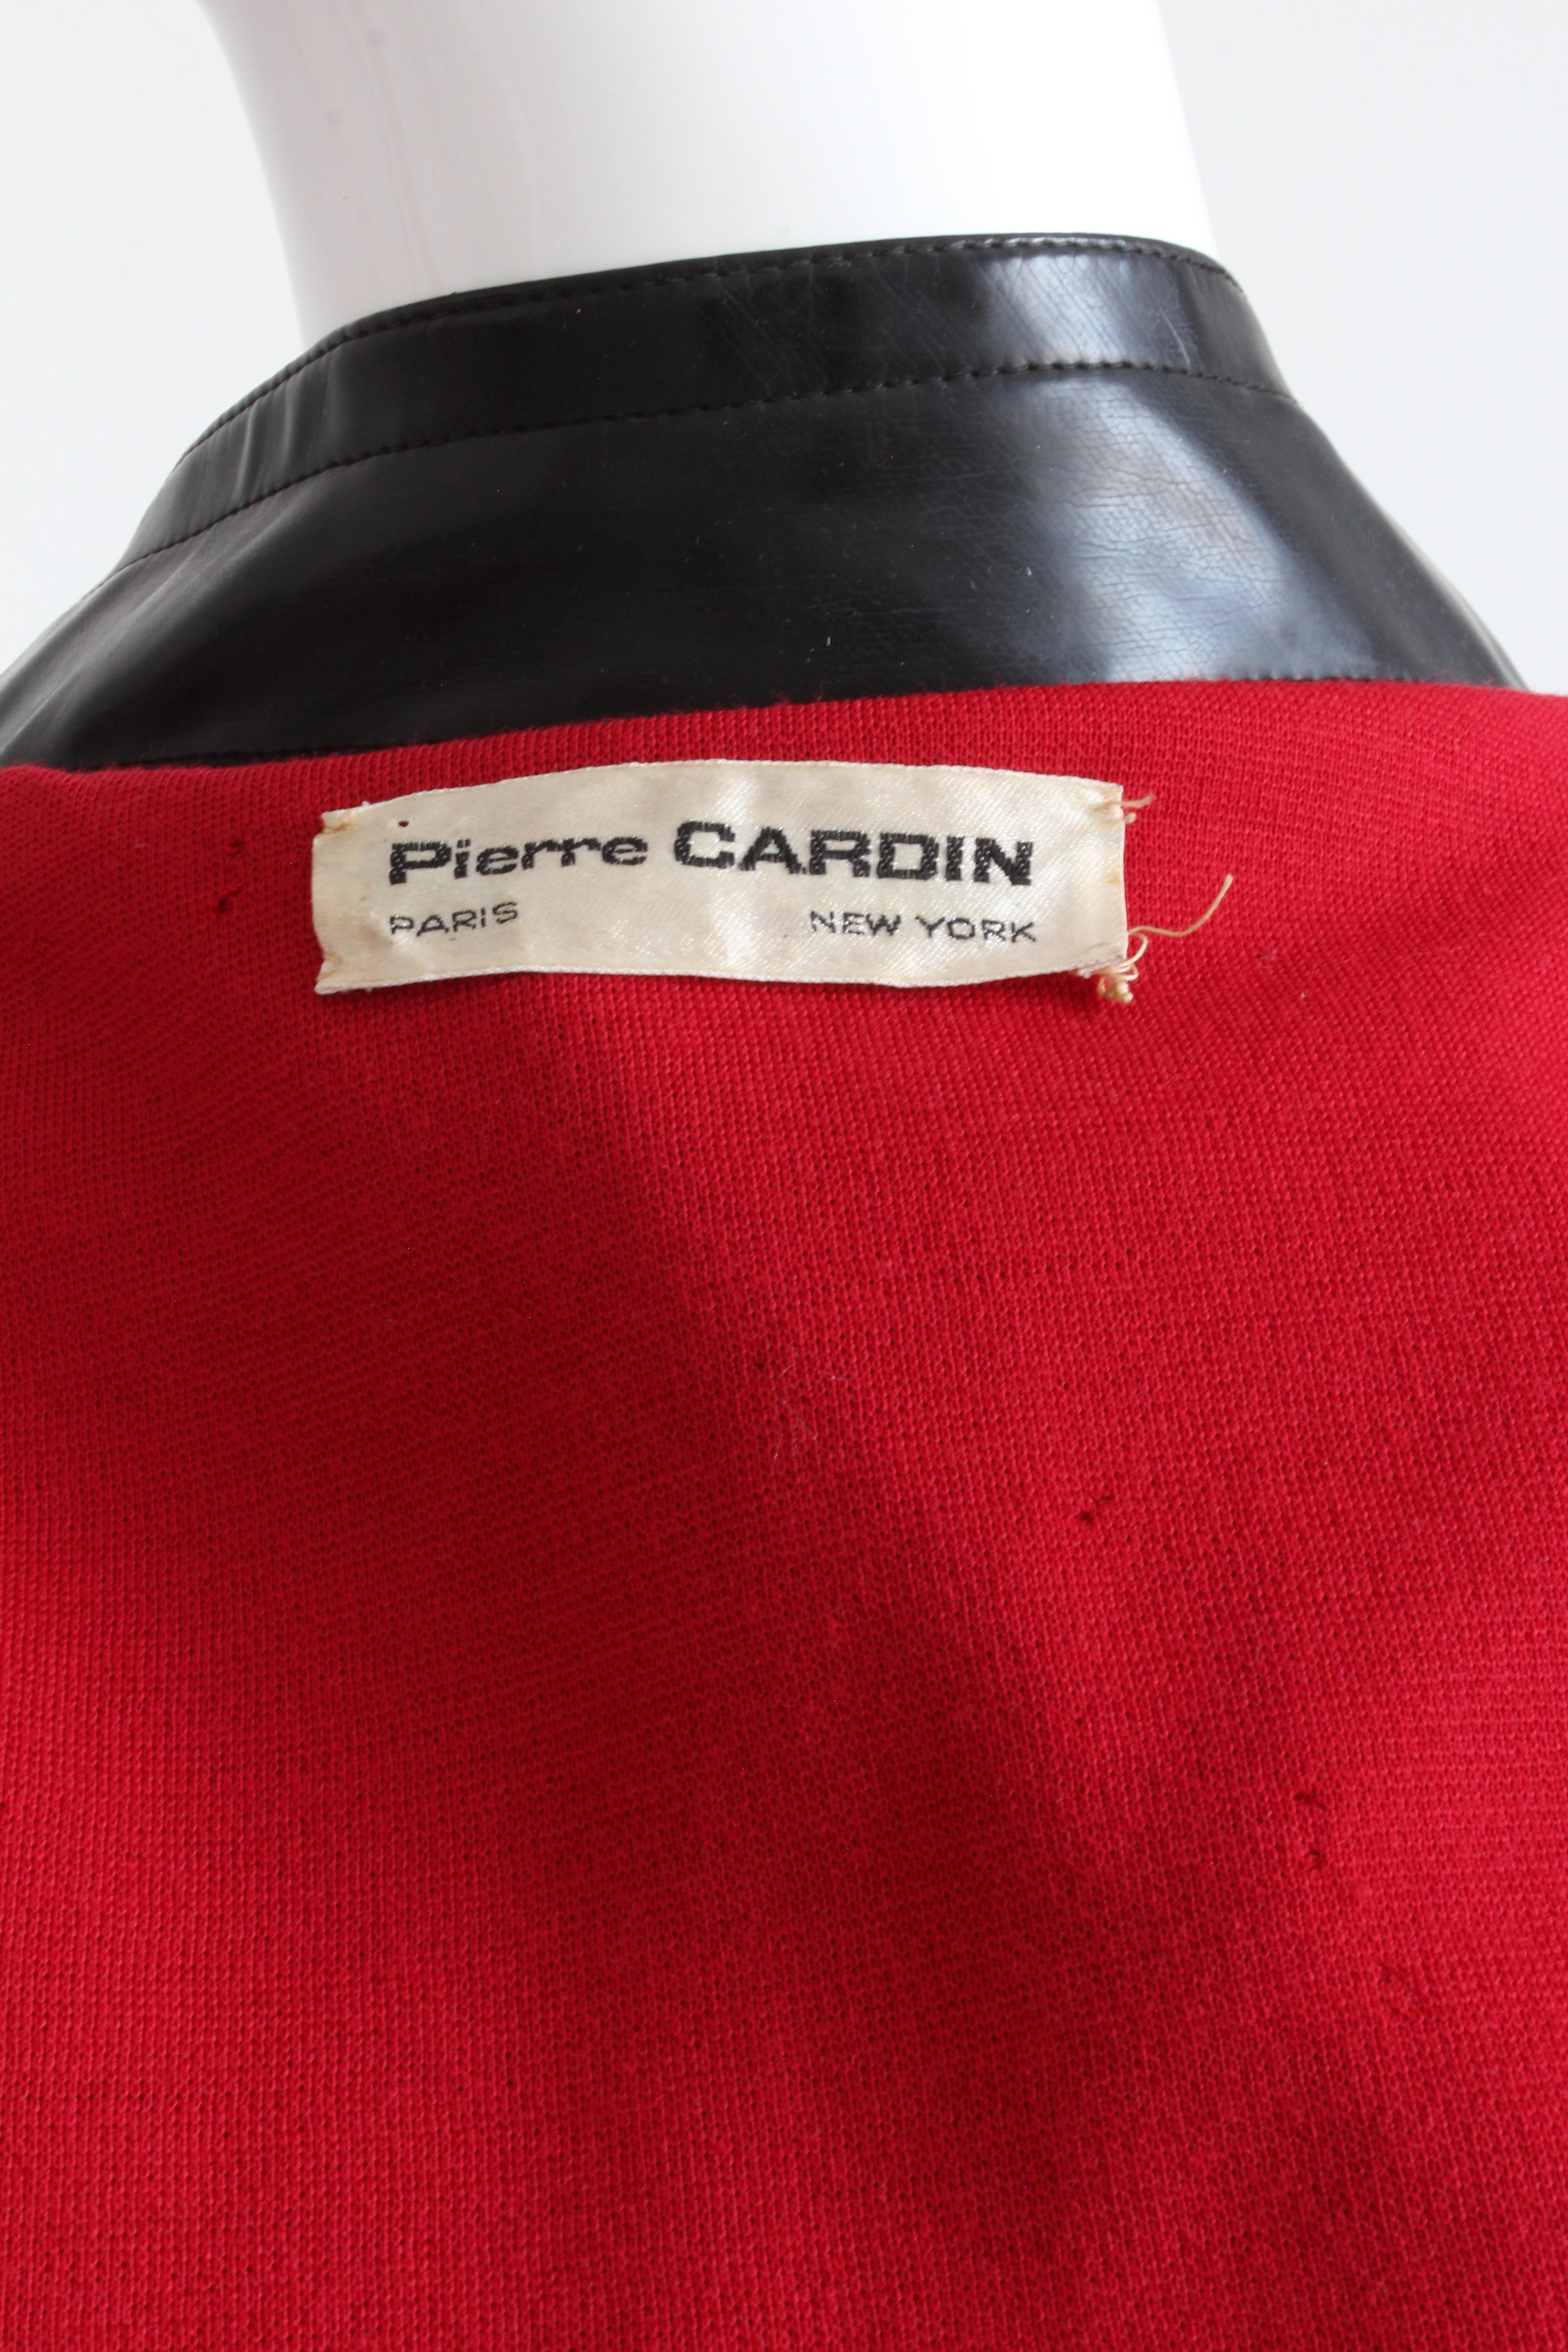 Pierre Cardin Space Age Coat Black Vinyl Circle Pocket Jacket 1960s S/M  3